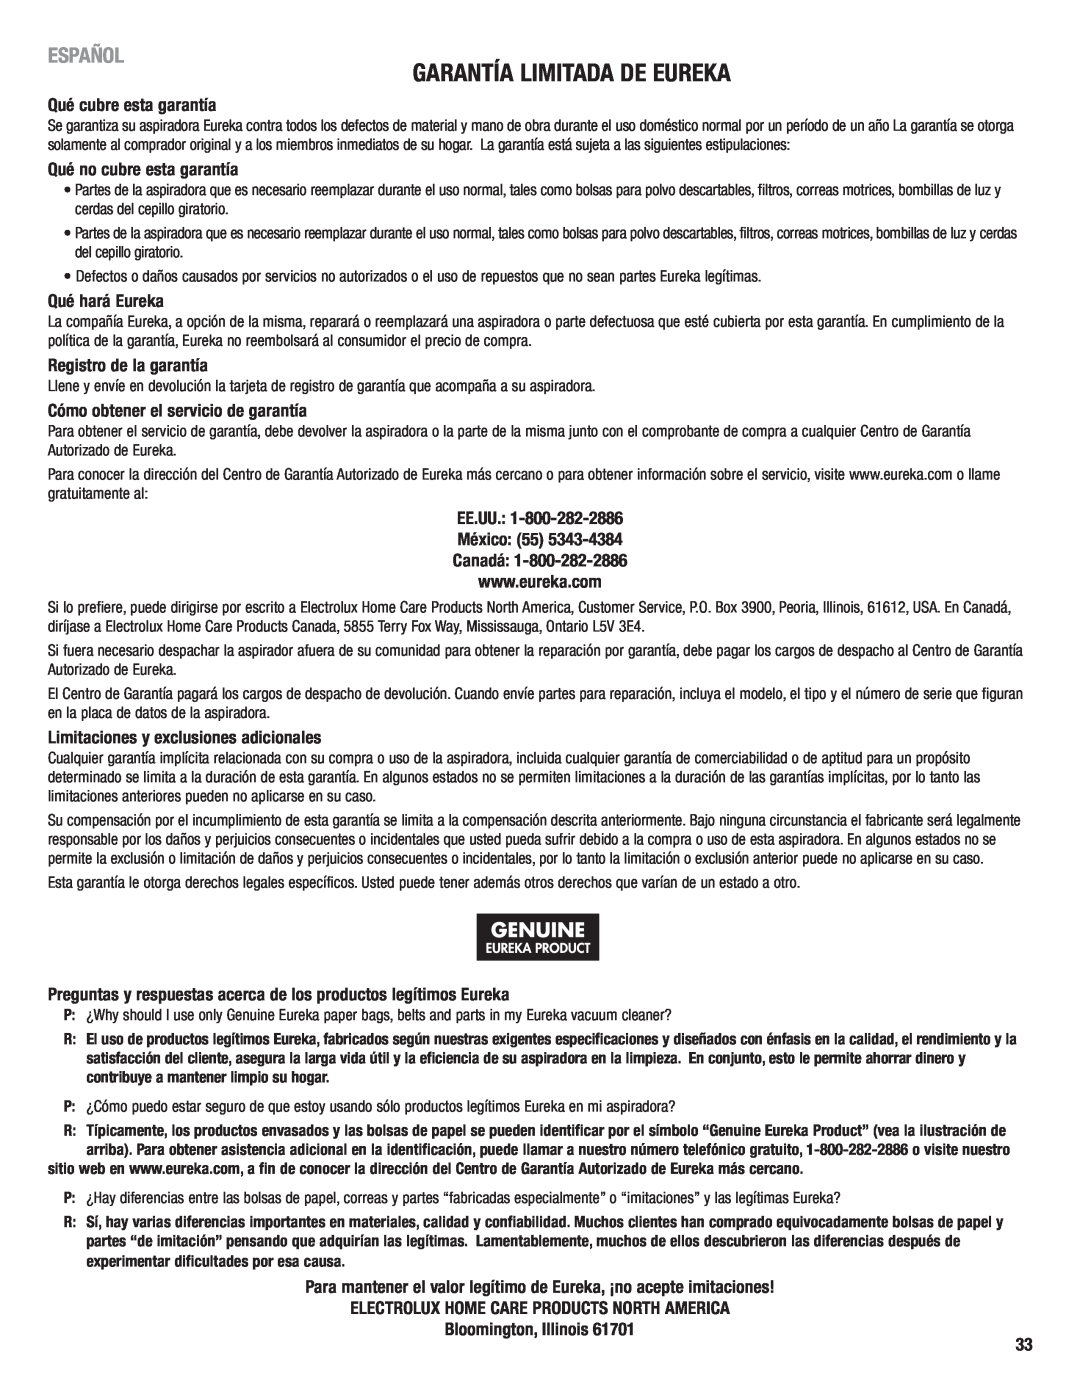 Eureka 4750 manual Garantía Limitada De Eureka, Español 